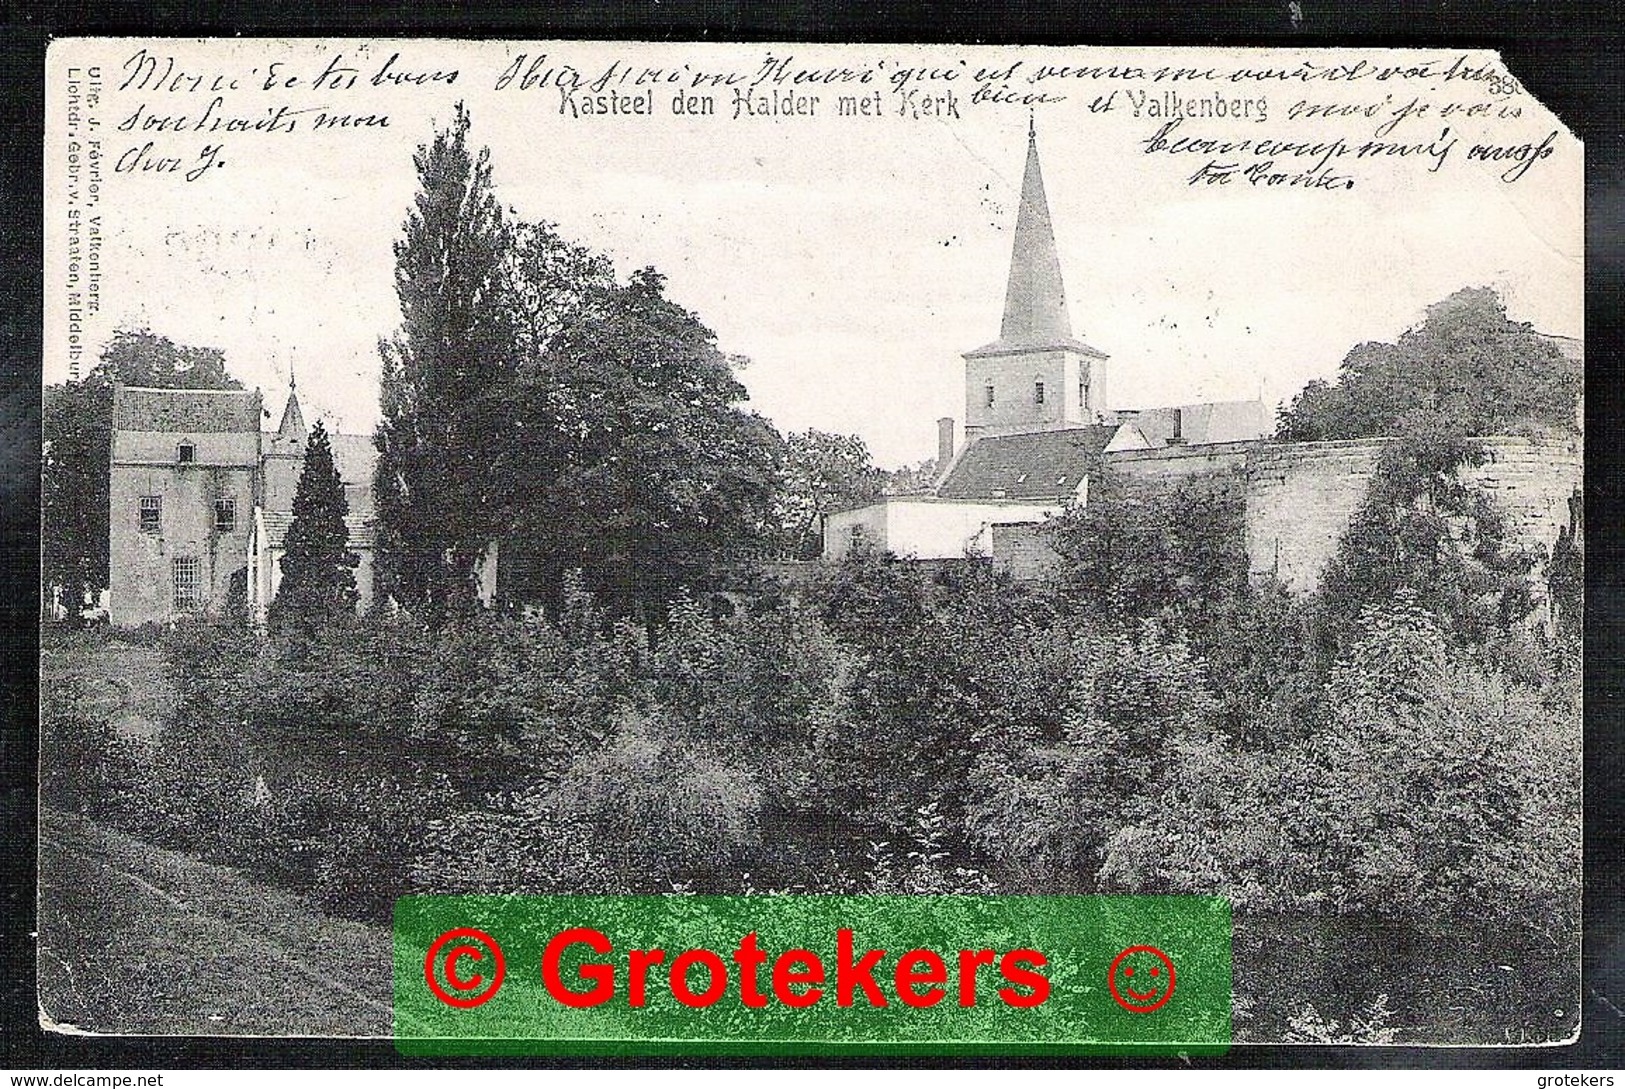 HOUTHEM Grootrondstempel Op Ansichtkaart Valkenberg Kasteel Den Halder Met Kerk  1903 - Poststempels/ Marcofilie